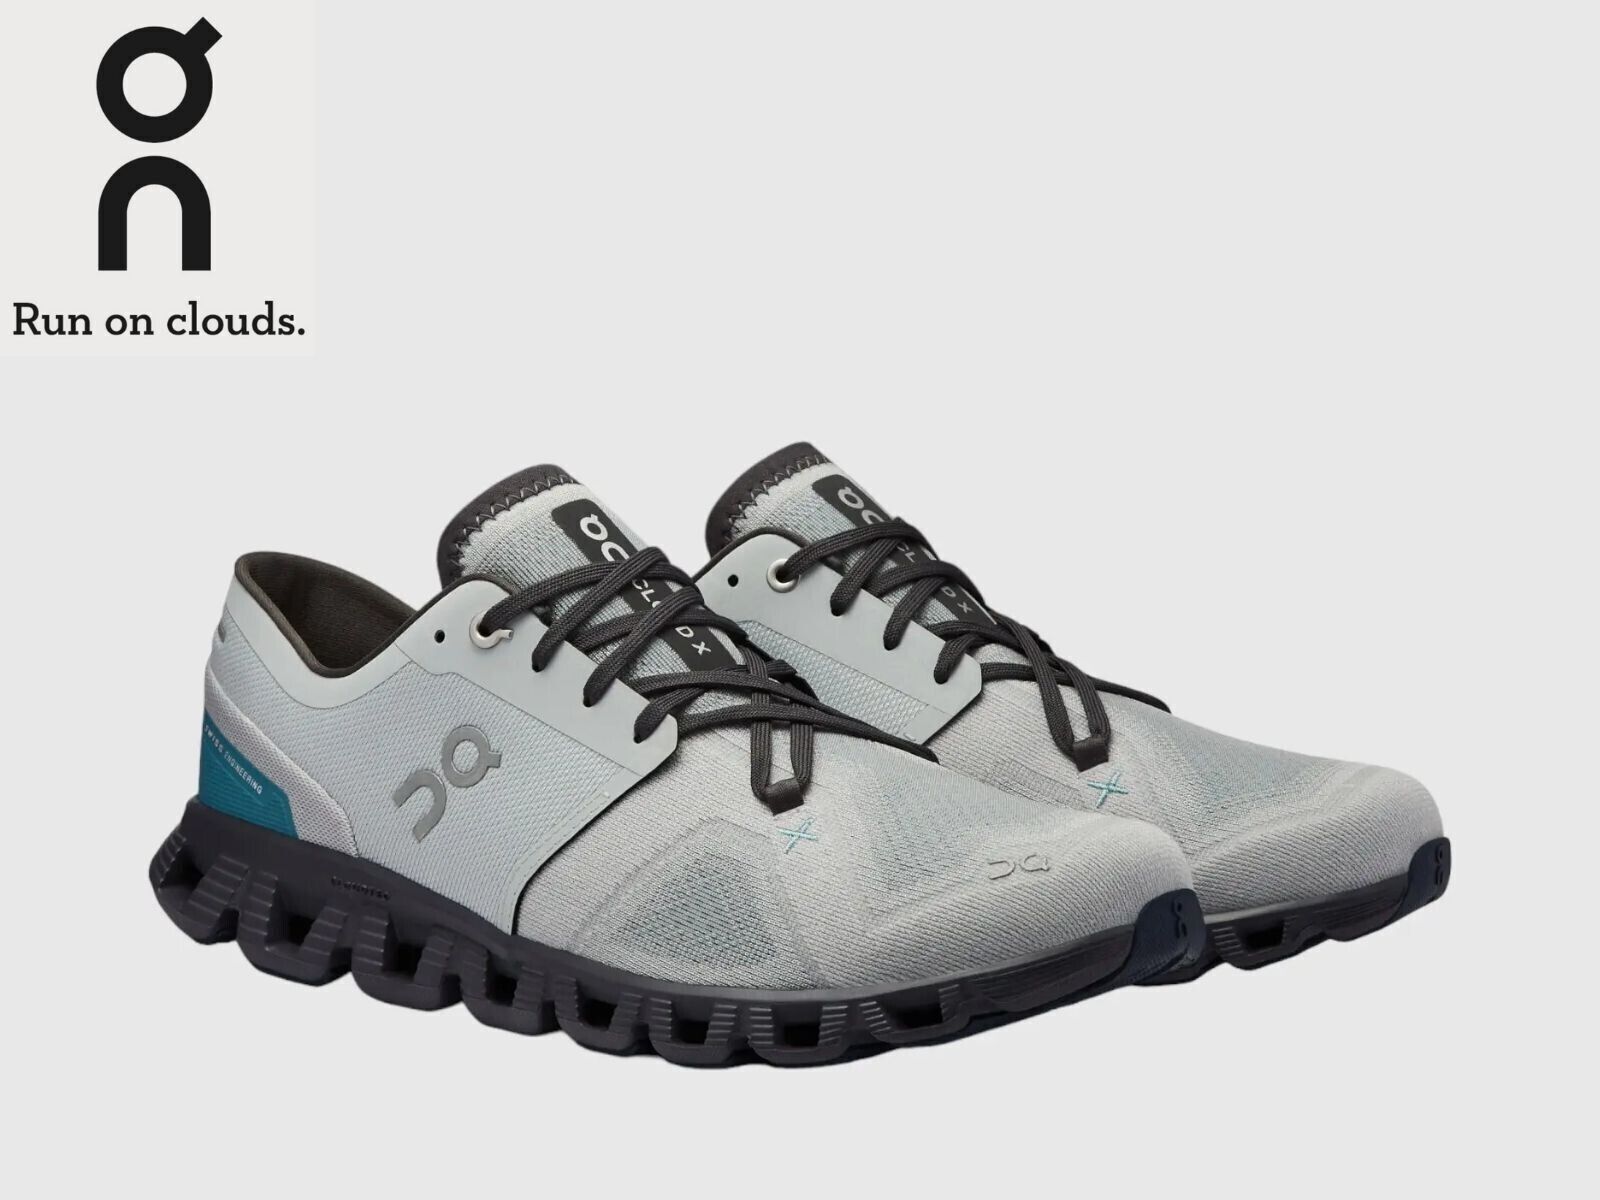 SALE OFF ON CLOUD X 3 Men's Running Shoes Color Glacier | Iron US Size O*